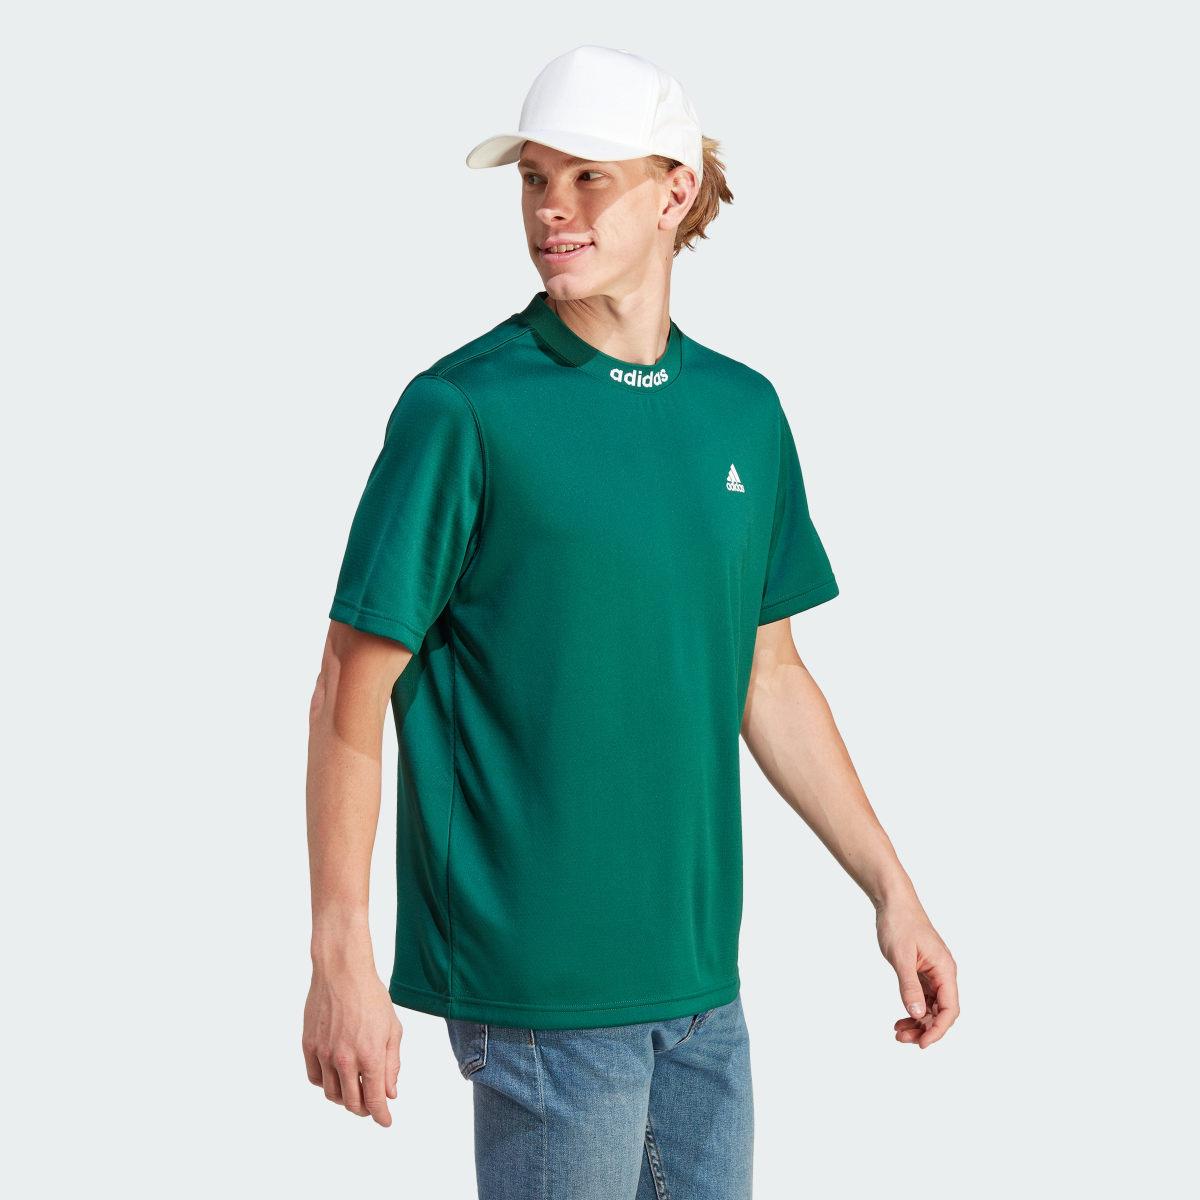 Adidas T-shirt Mesh-Back. 4